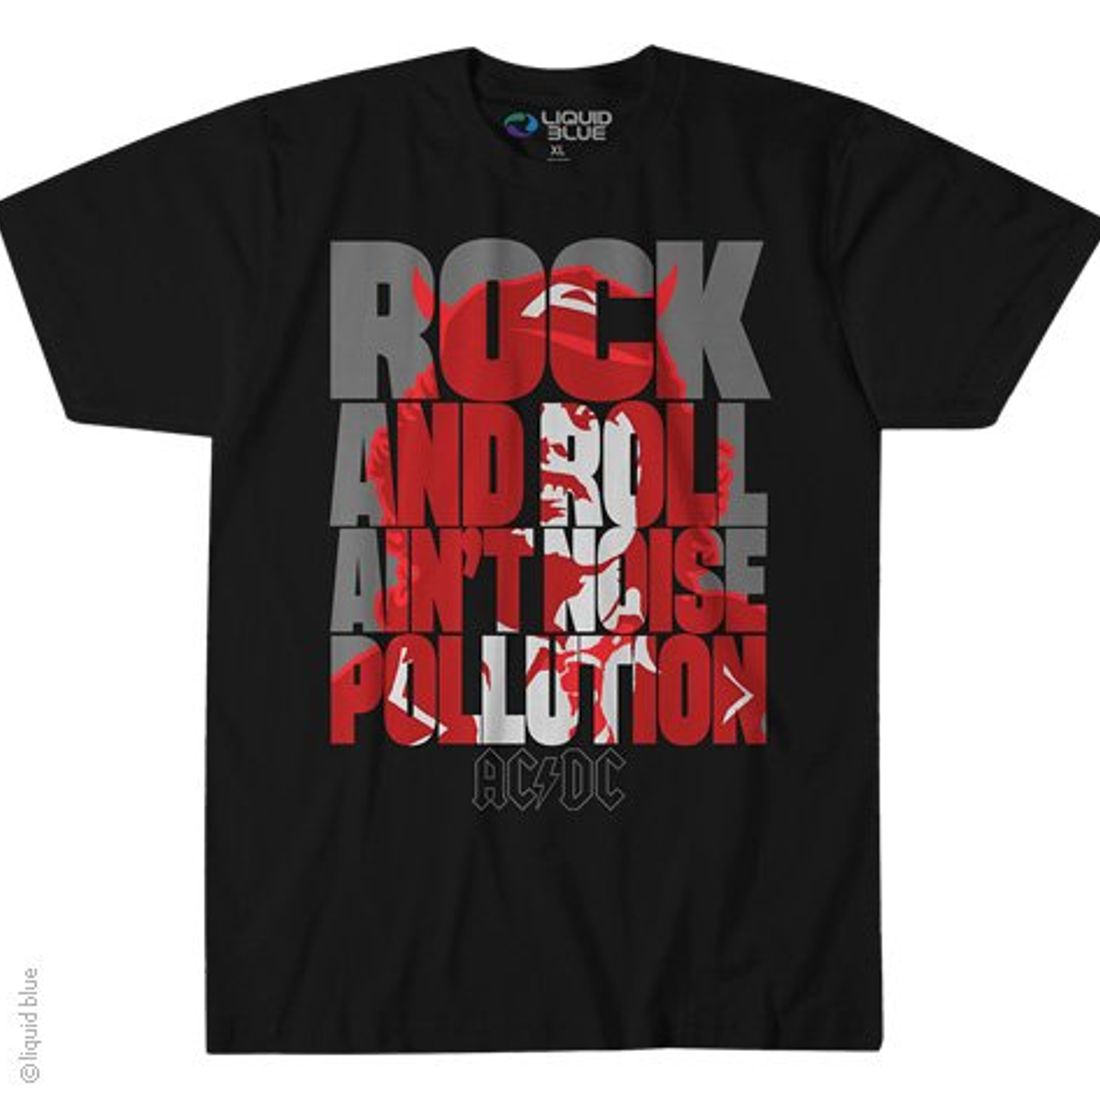 Liquid Blue T-Shirt - AC/DC - Noise Pollution